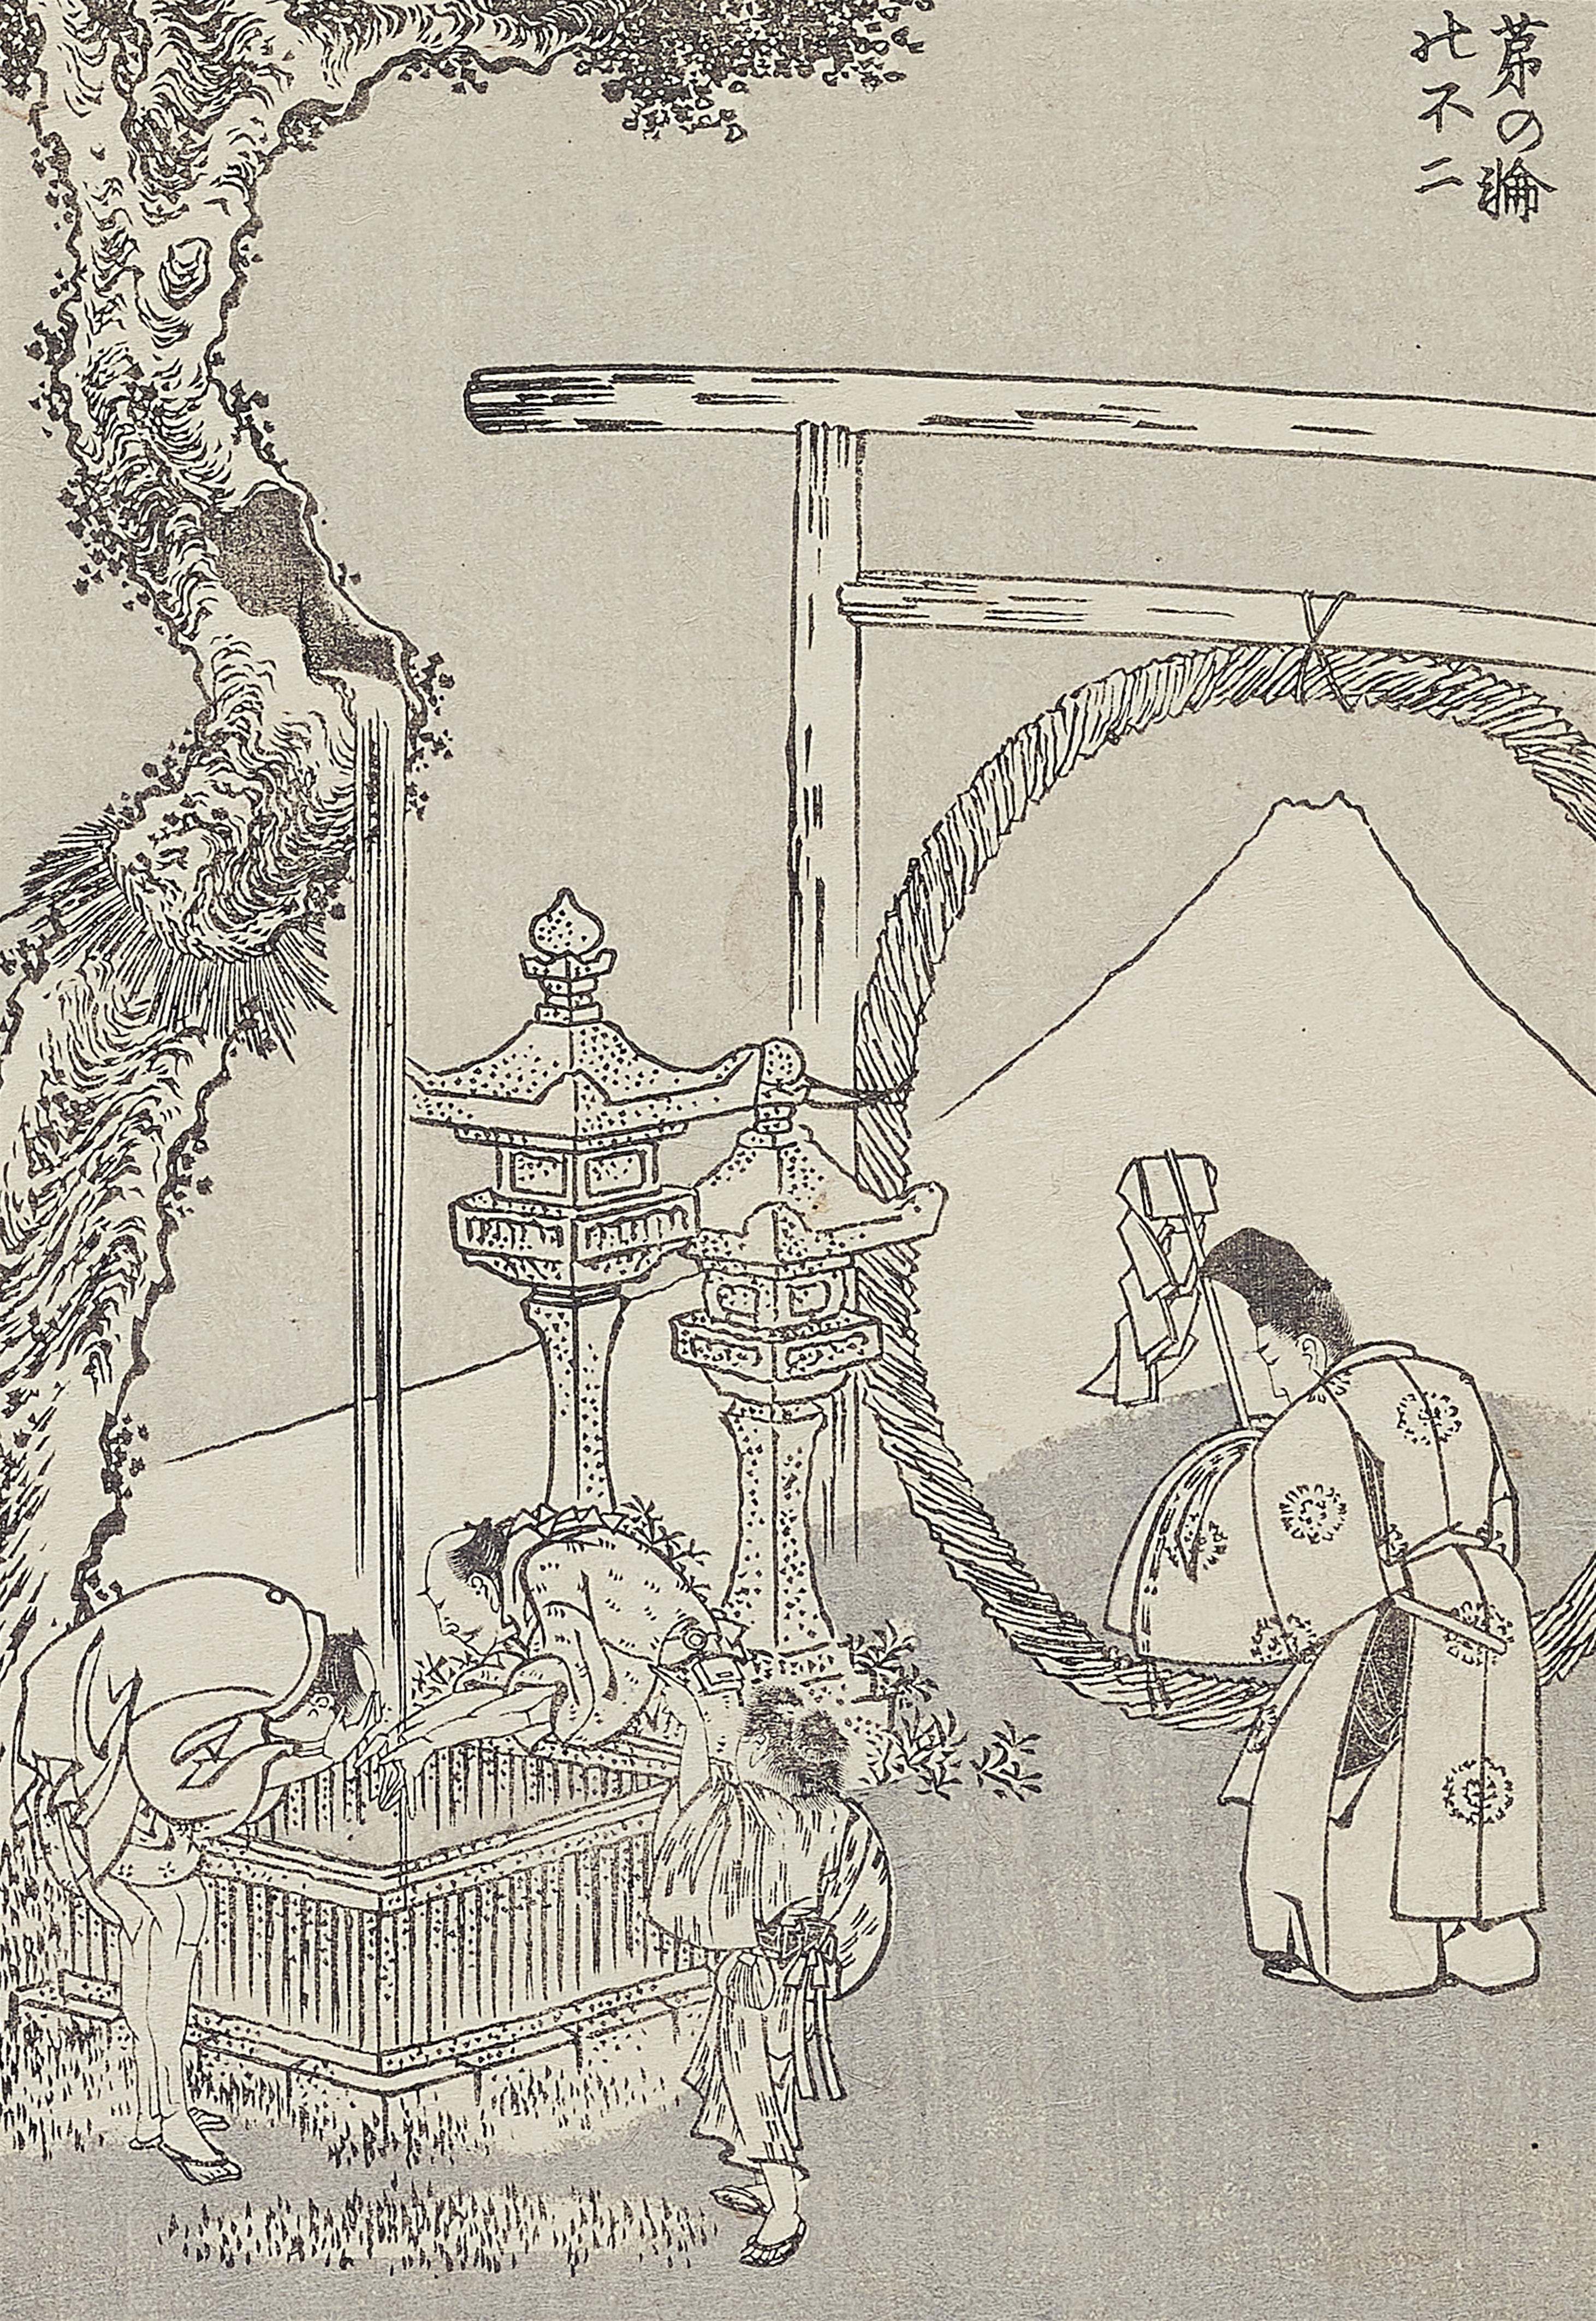 Katsushika Hokusai - Black and white illustrations from the album Fugaku hyakkei - image-36